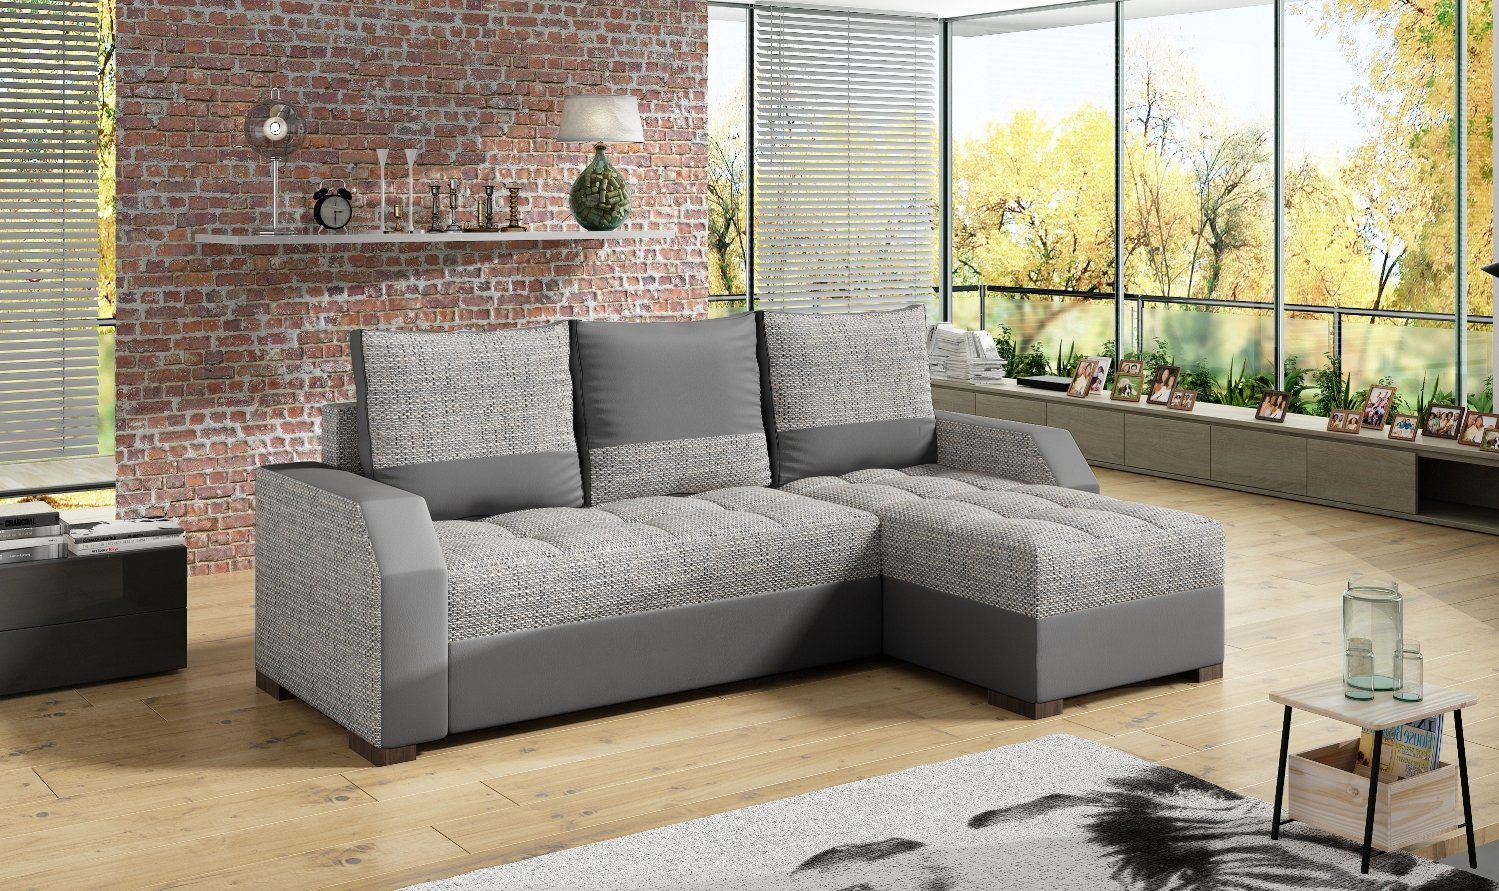 JVmoebel Ecksofa, Design Couchen Couch Sofas Bettfunktion Grau Leder Textil Polster Ecksofa